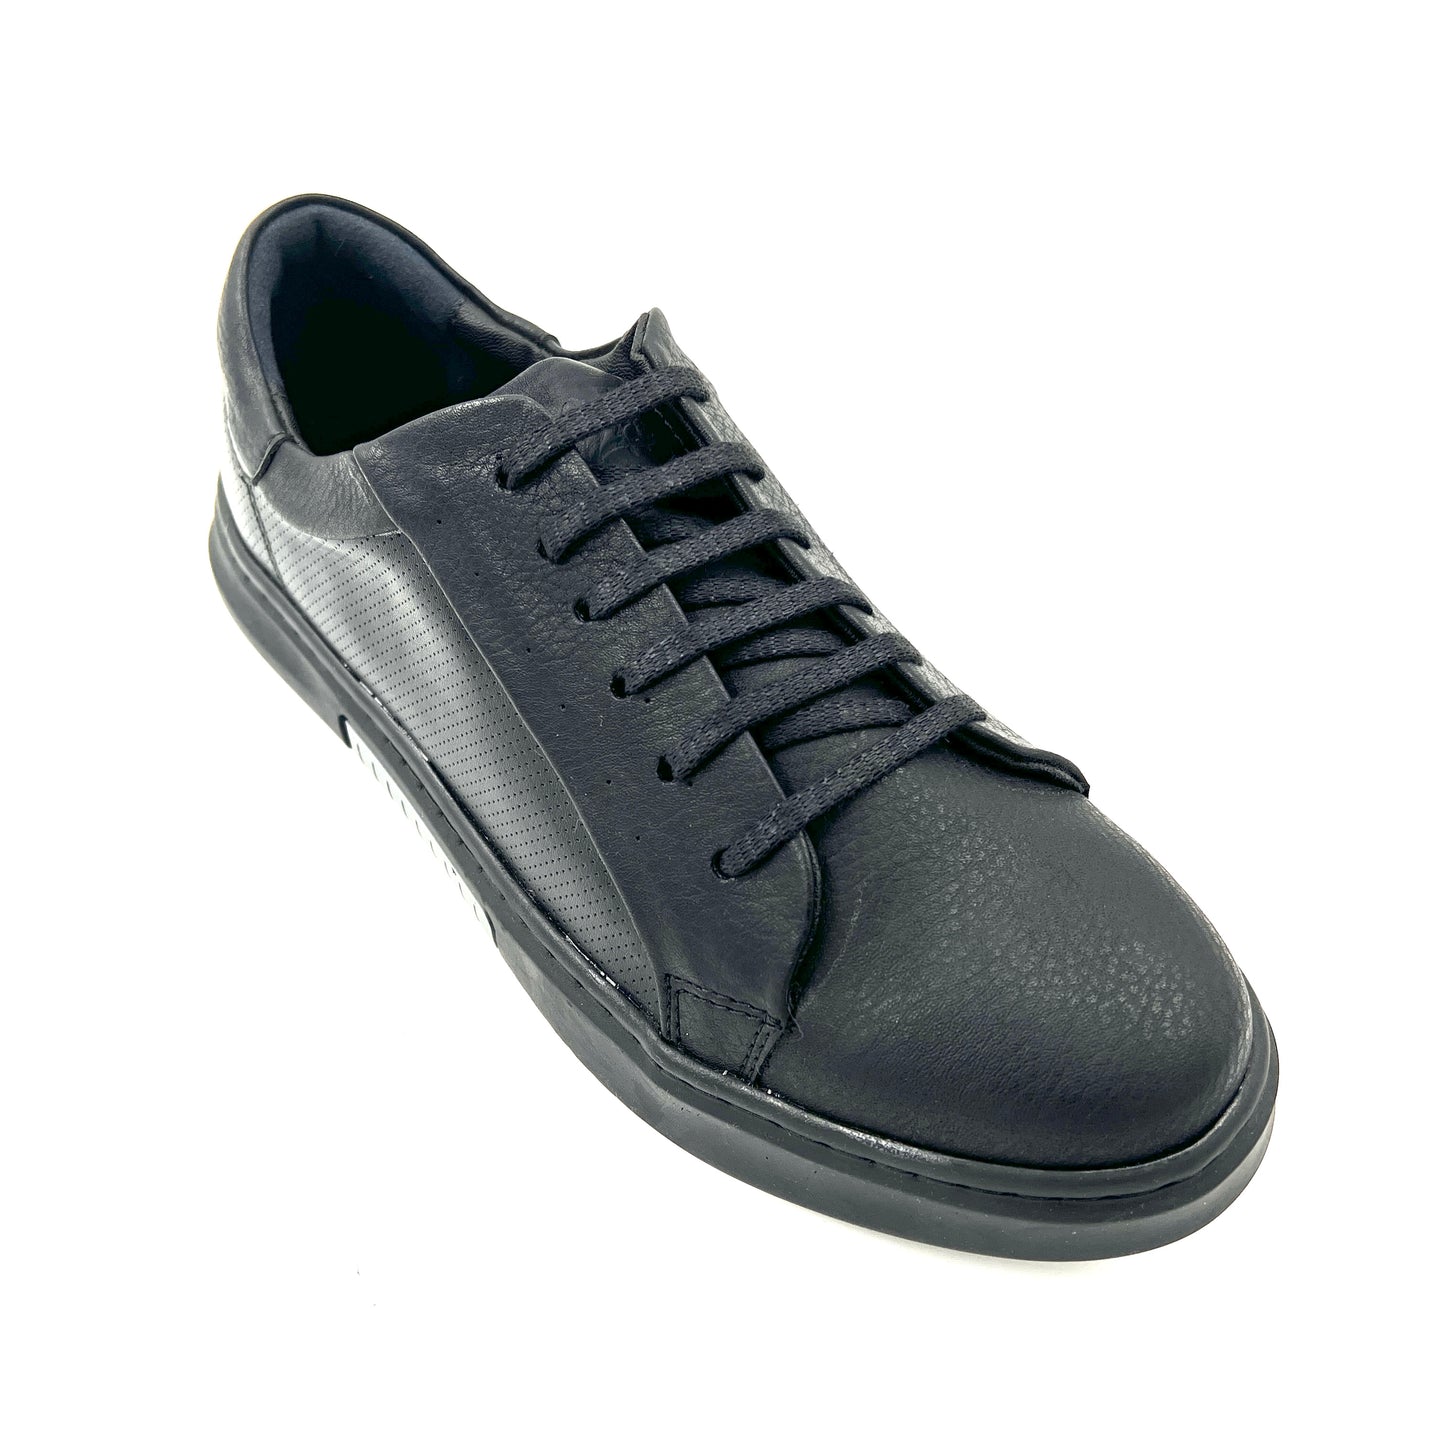 SALE! 2H 711 Black/Grey Casual Shoes